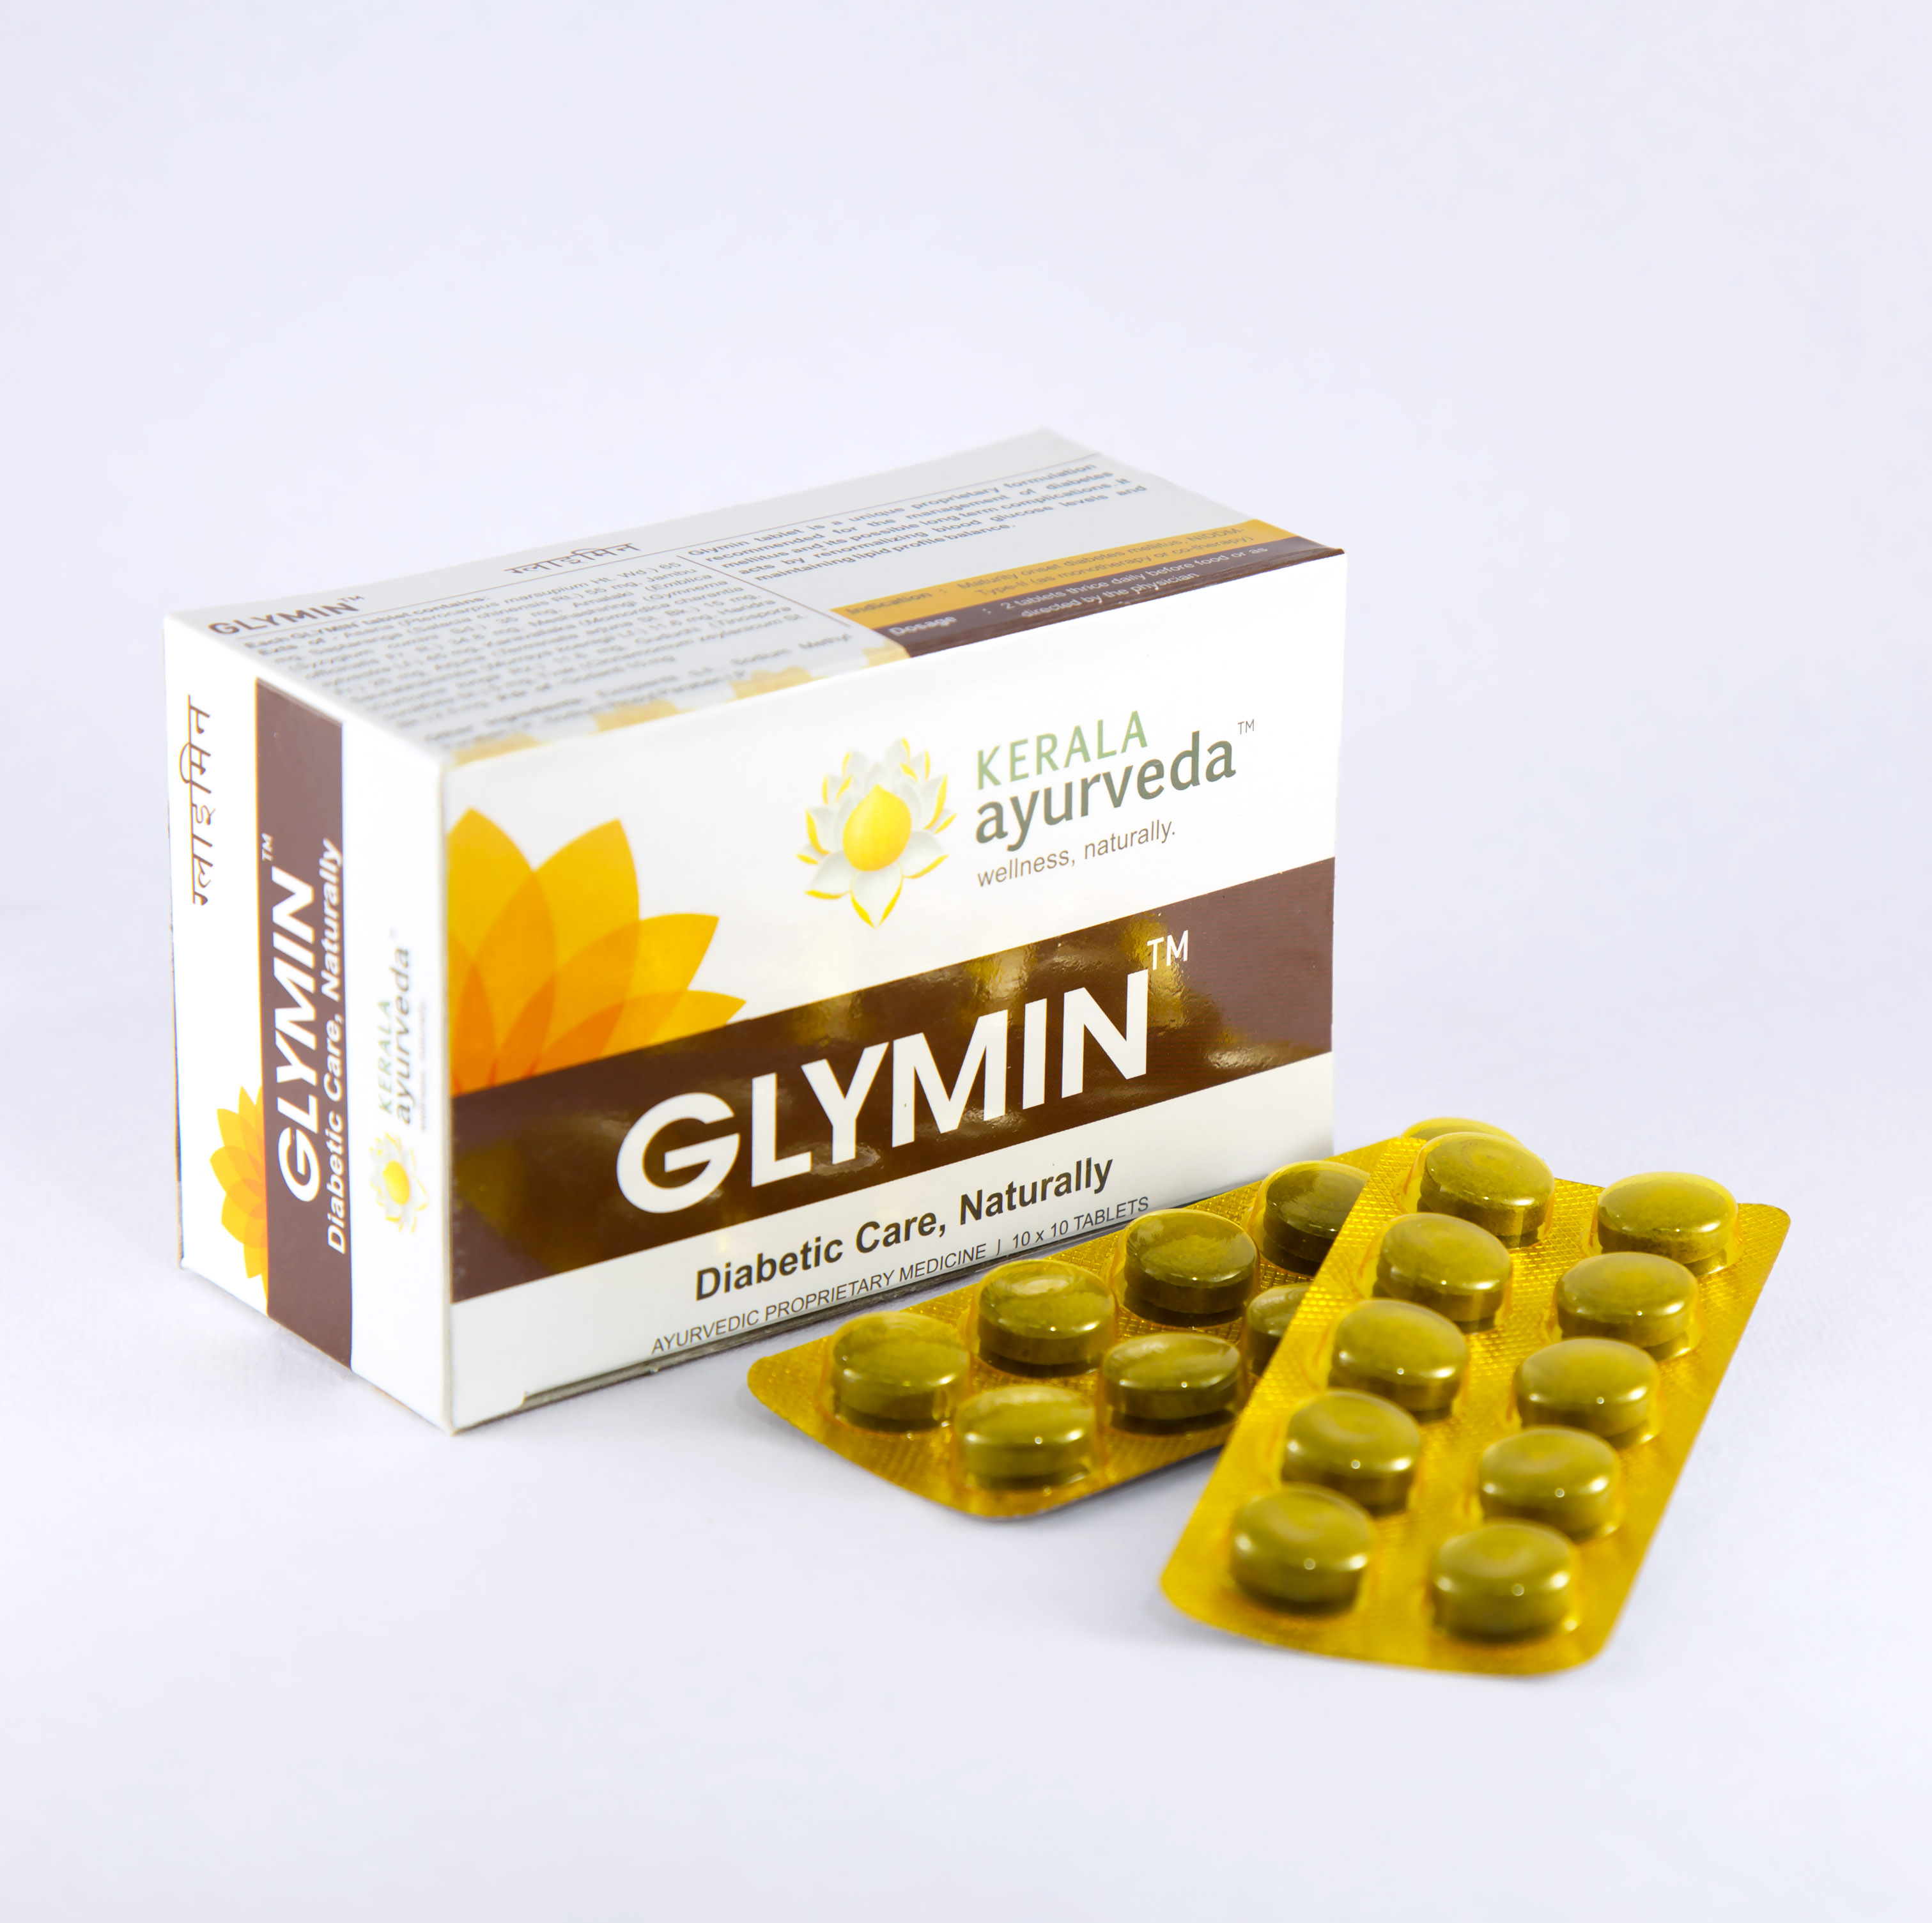 Buy Kerala Ayurveda Glymin Tablet at Best Price Online